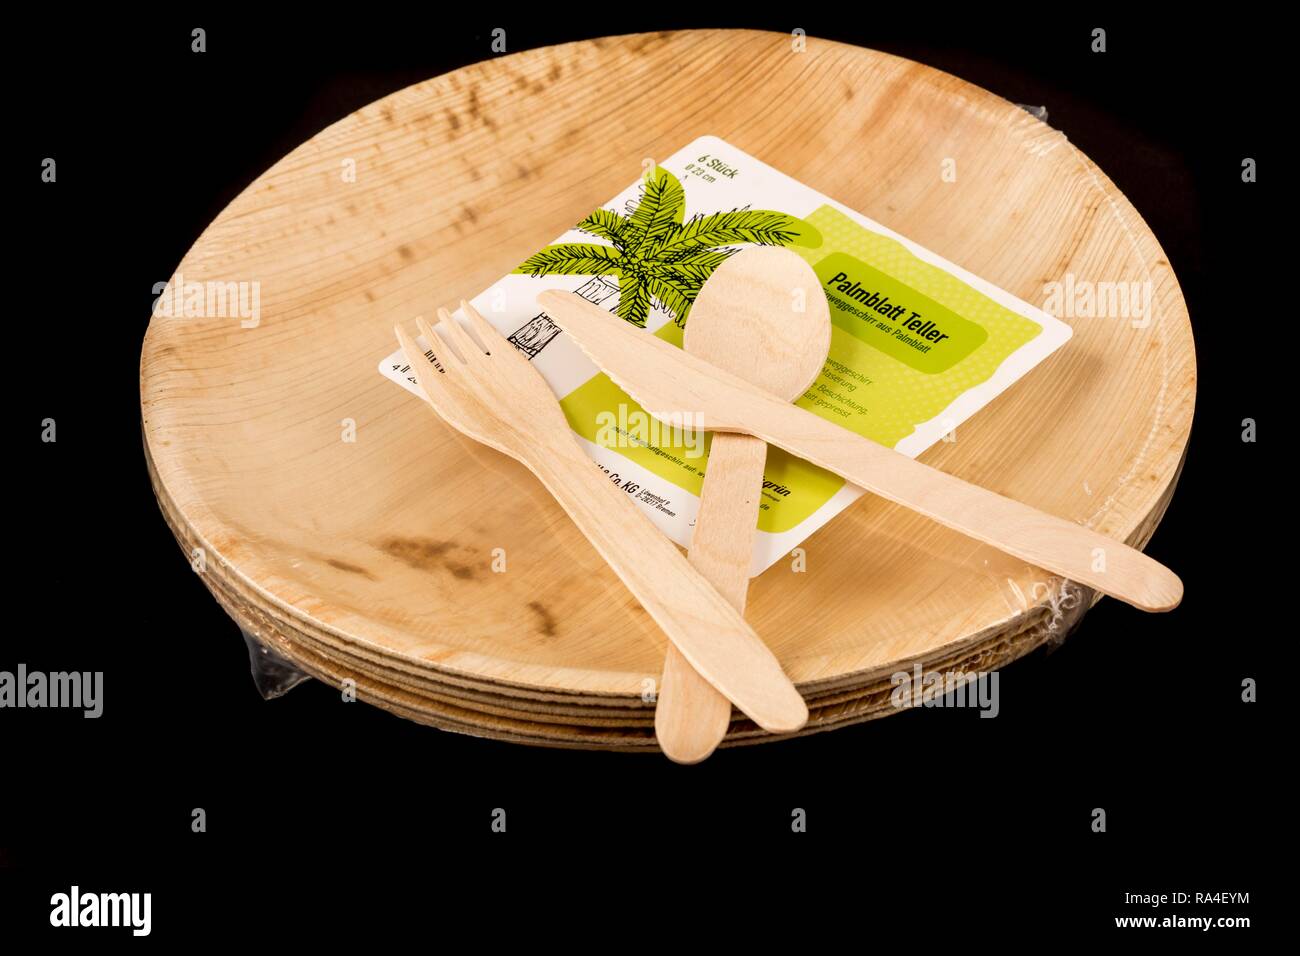 Verfügbare Holz- Besteck, recyclebar, palm leaf Platte, umweltfreundlich Stockfoto